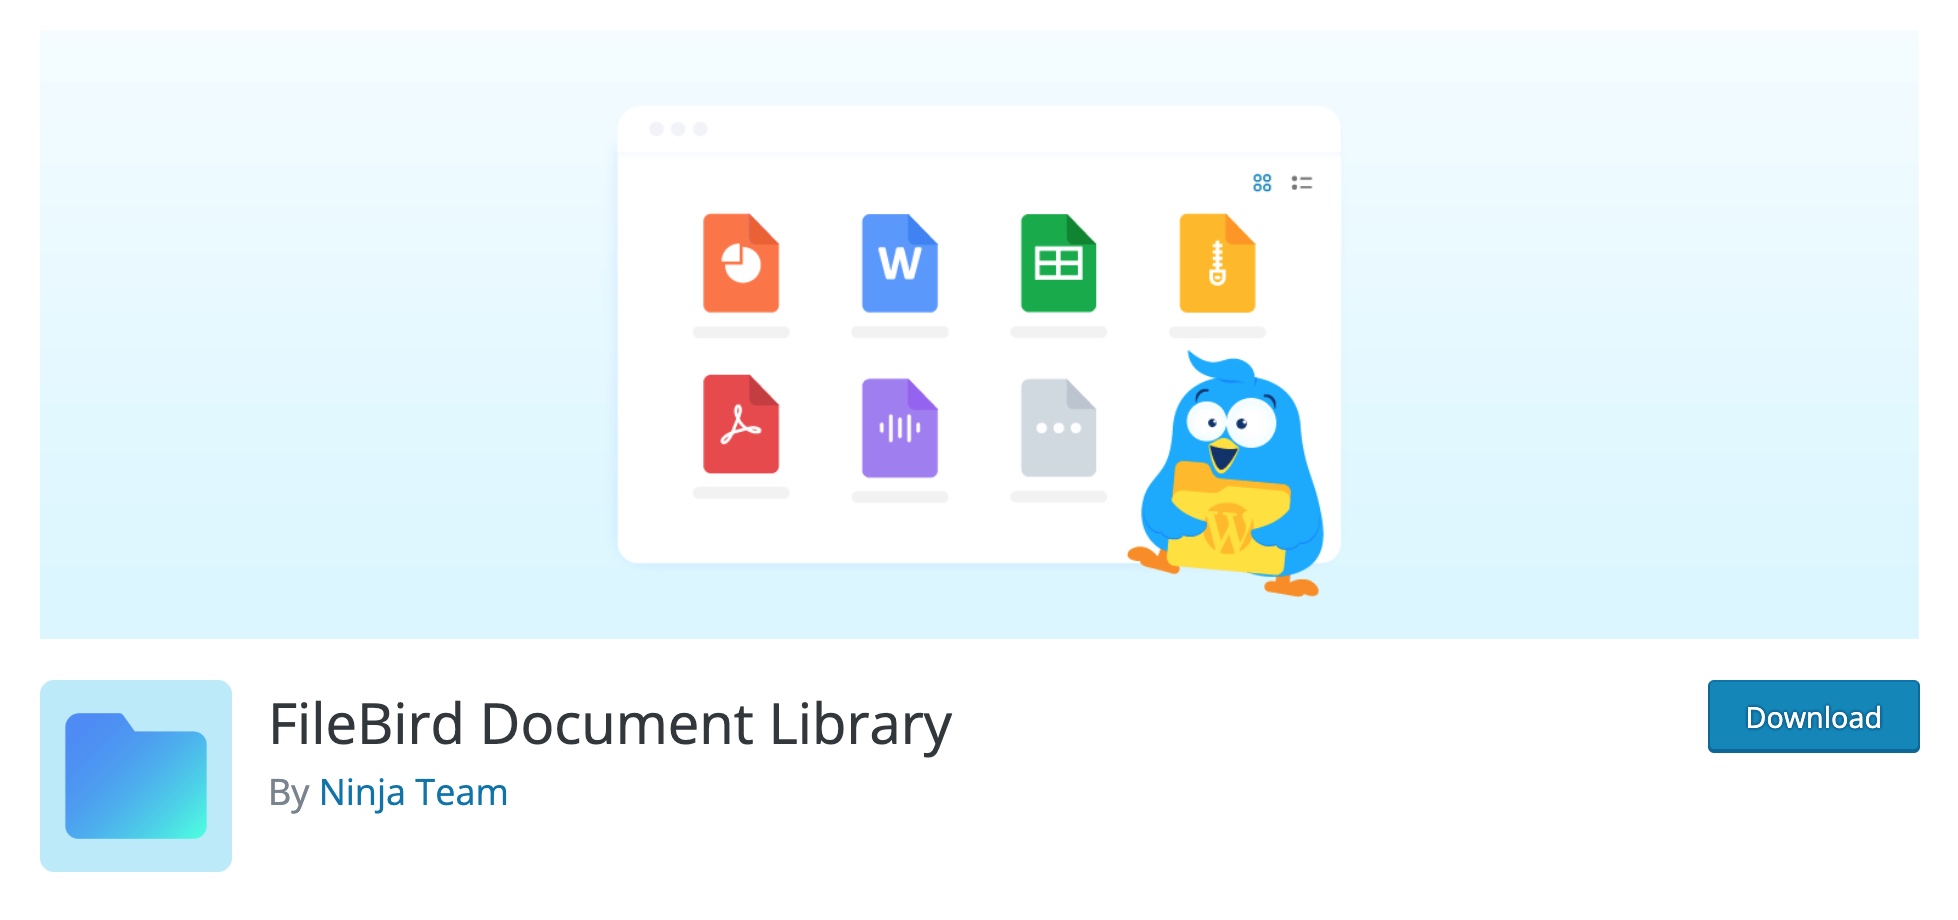 FileBird Document Library